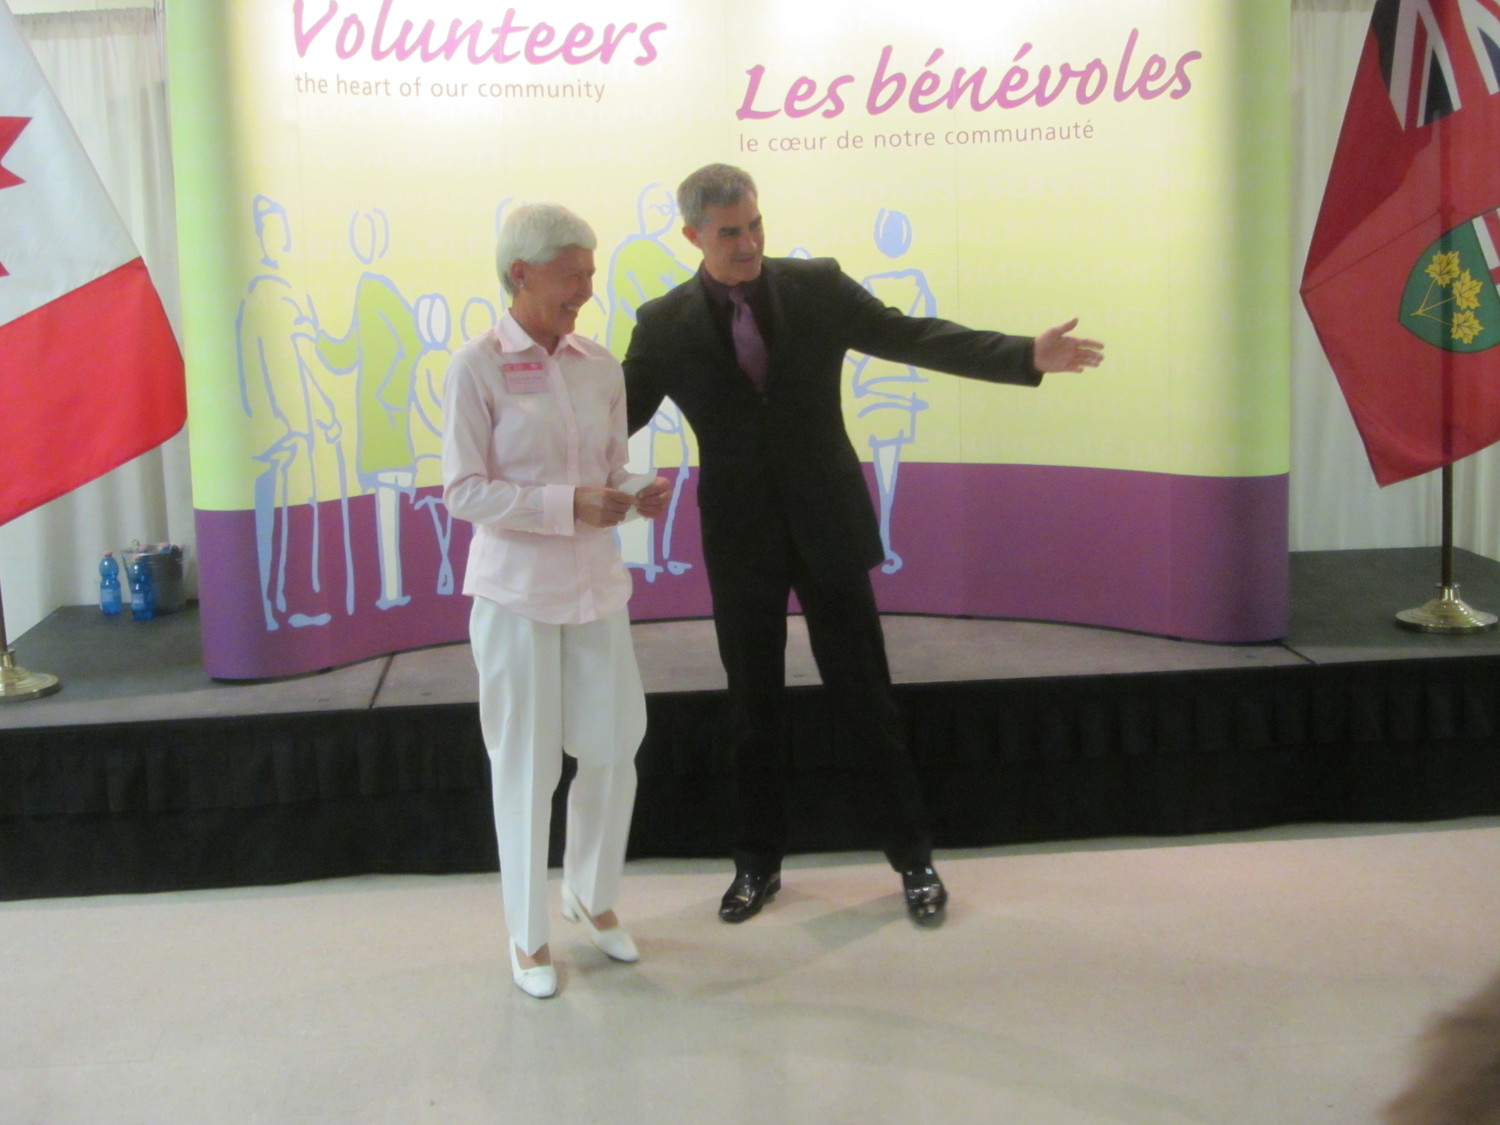 Ontario Volunteer Service Award | Ontario Volunteer Service Award 2013 - Connie Childs